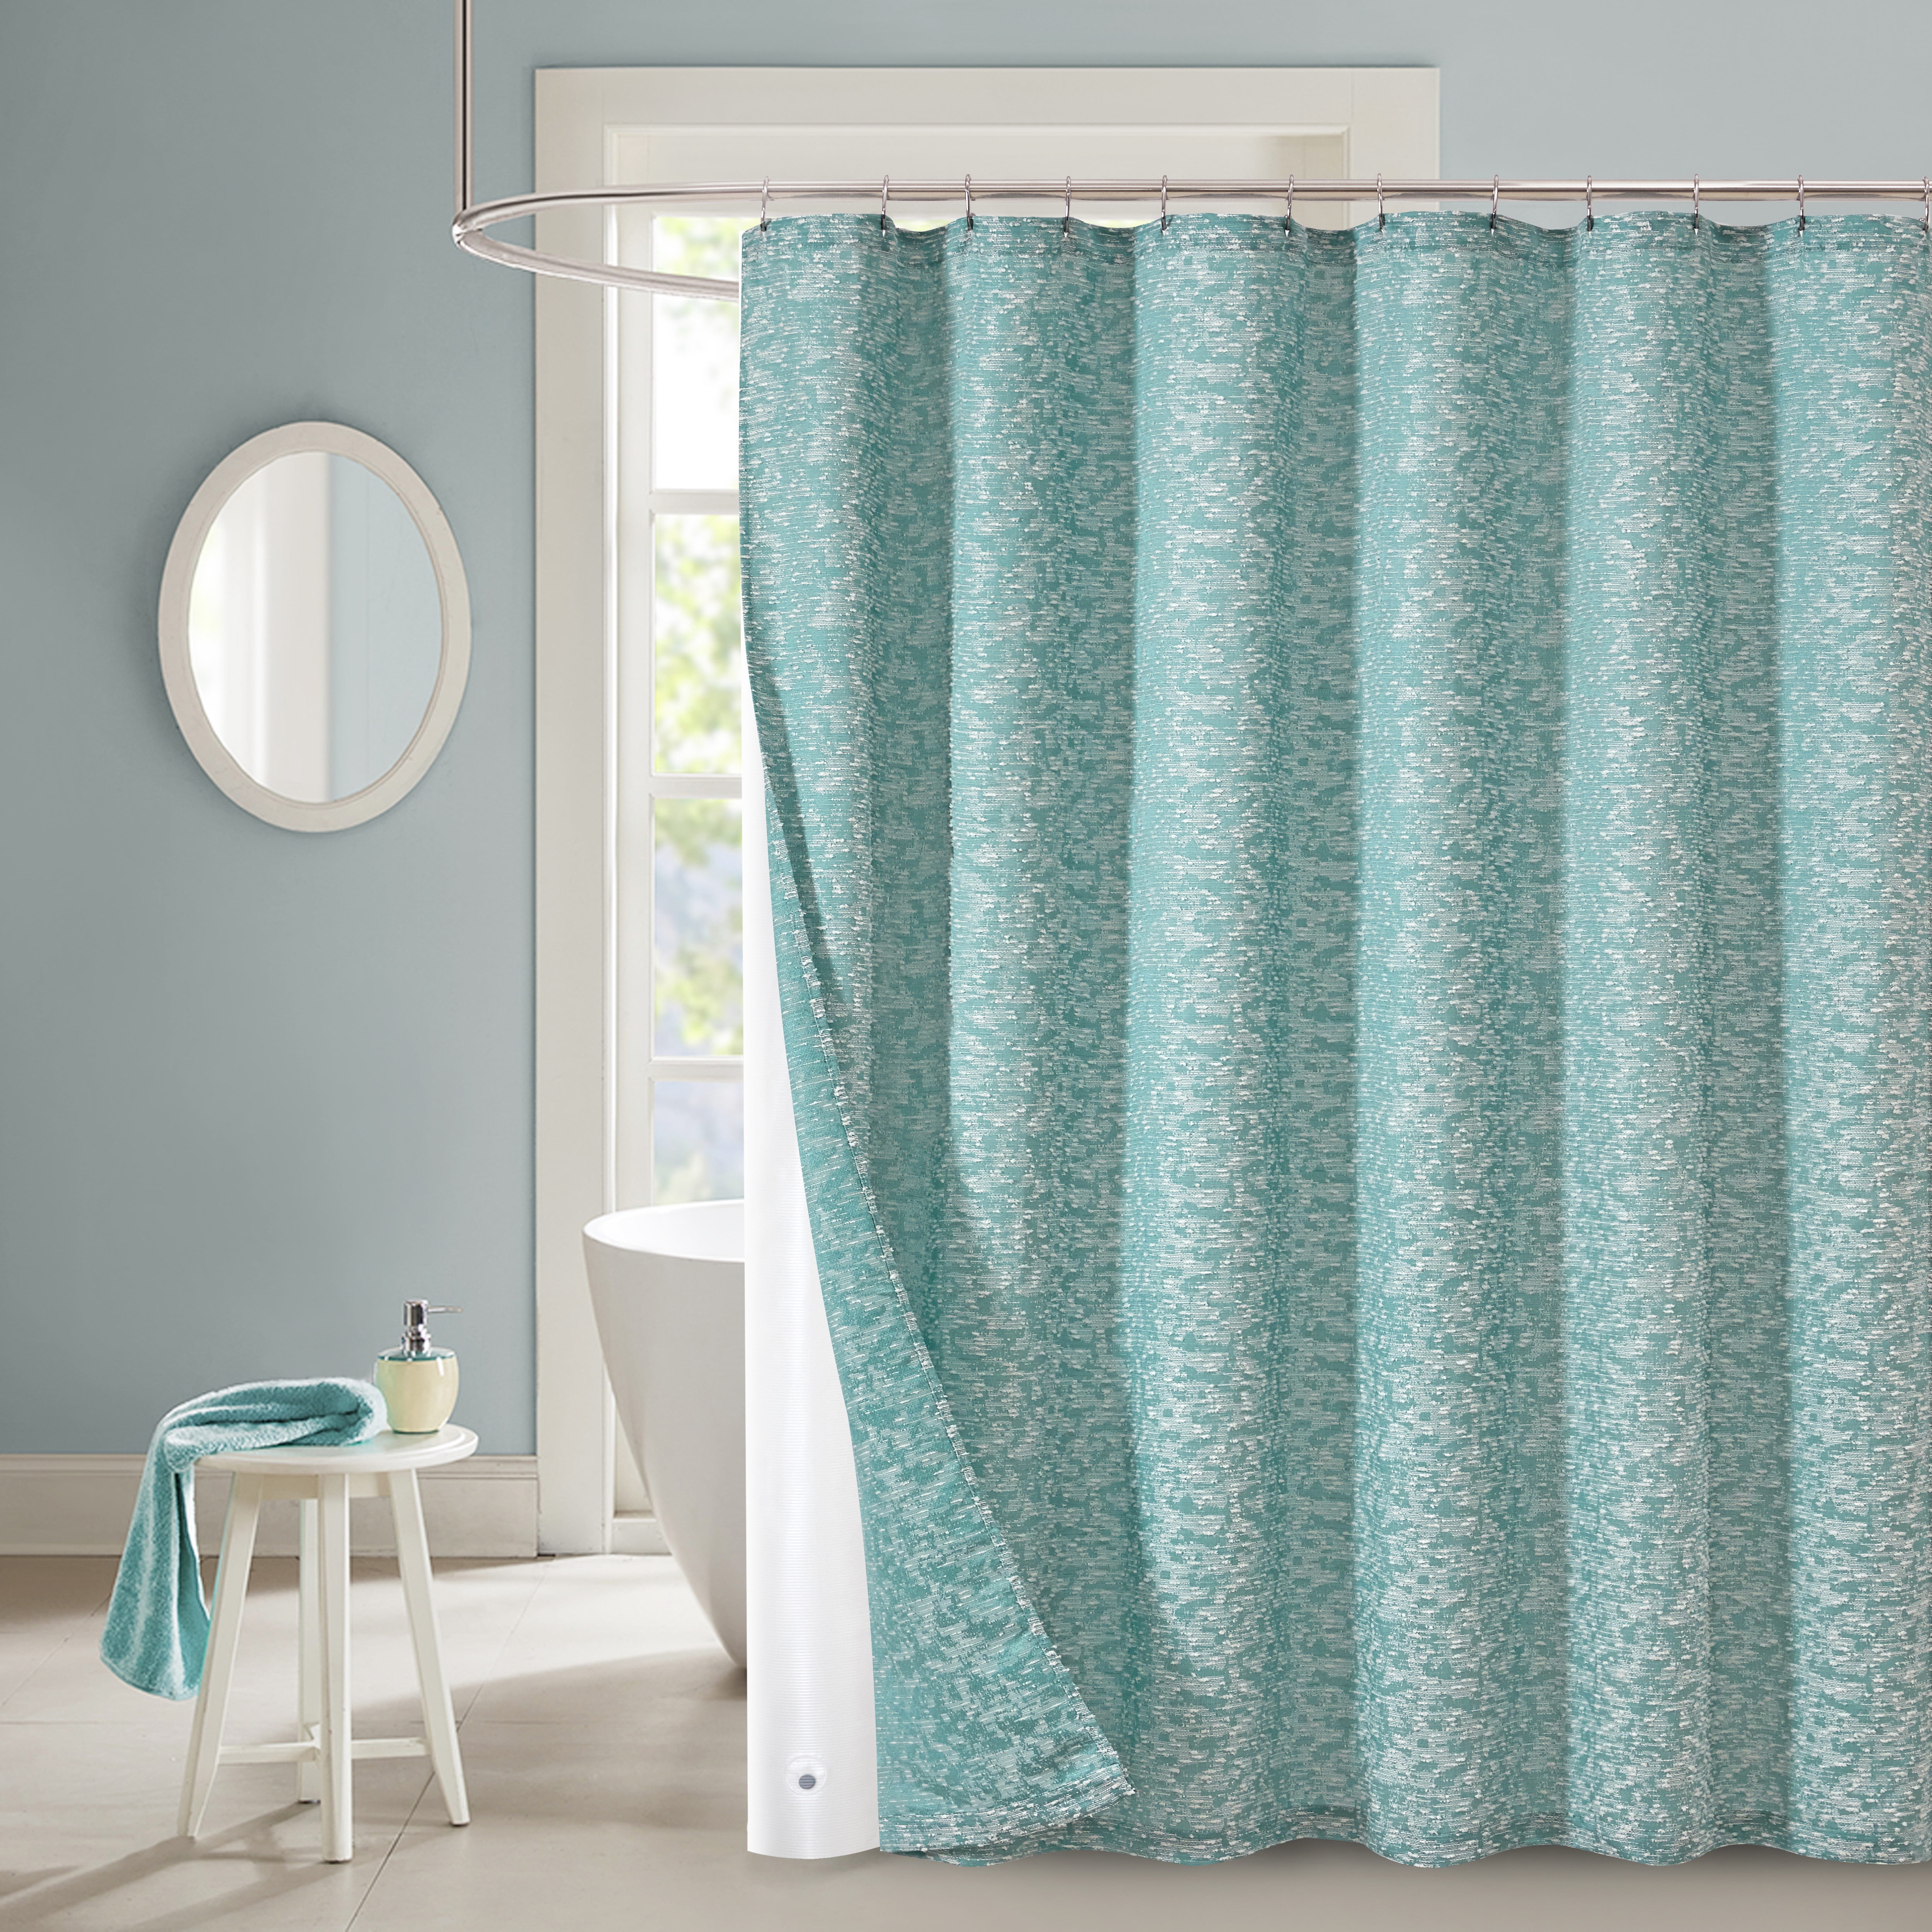 Shower Curtain Decor Set Home Decorations Geometry Design Bath Curtains 12 Hooks 